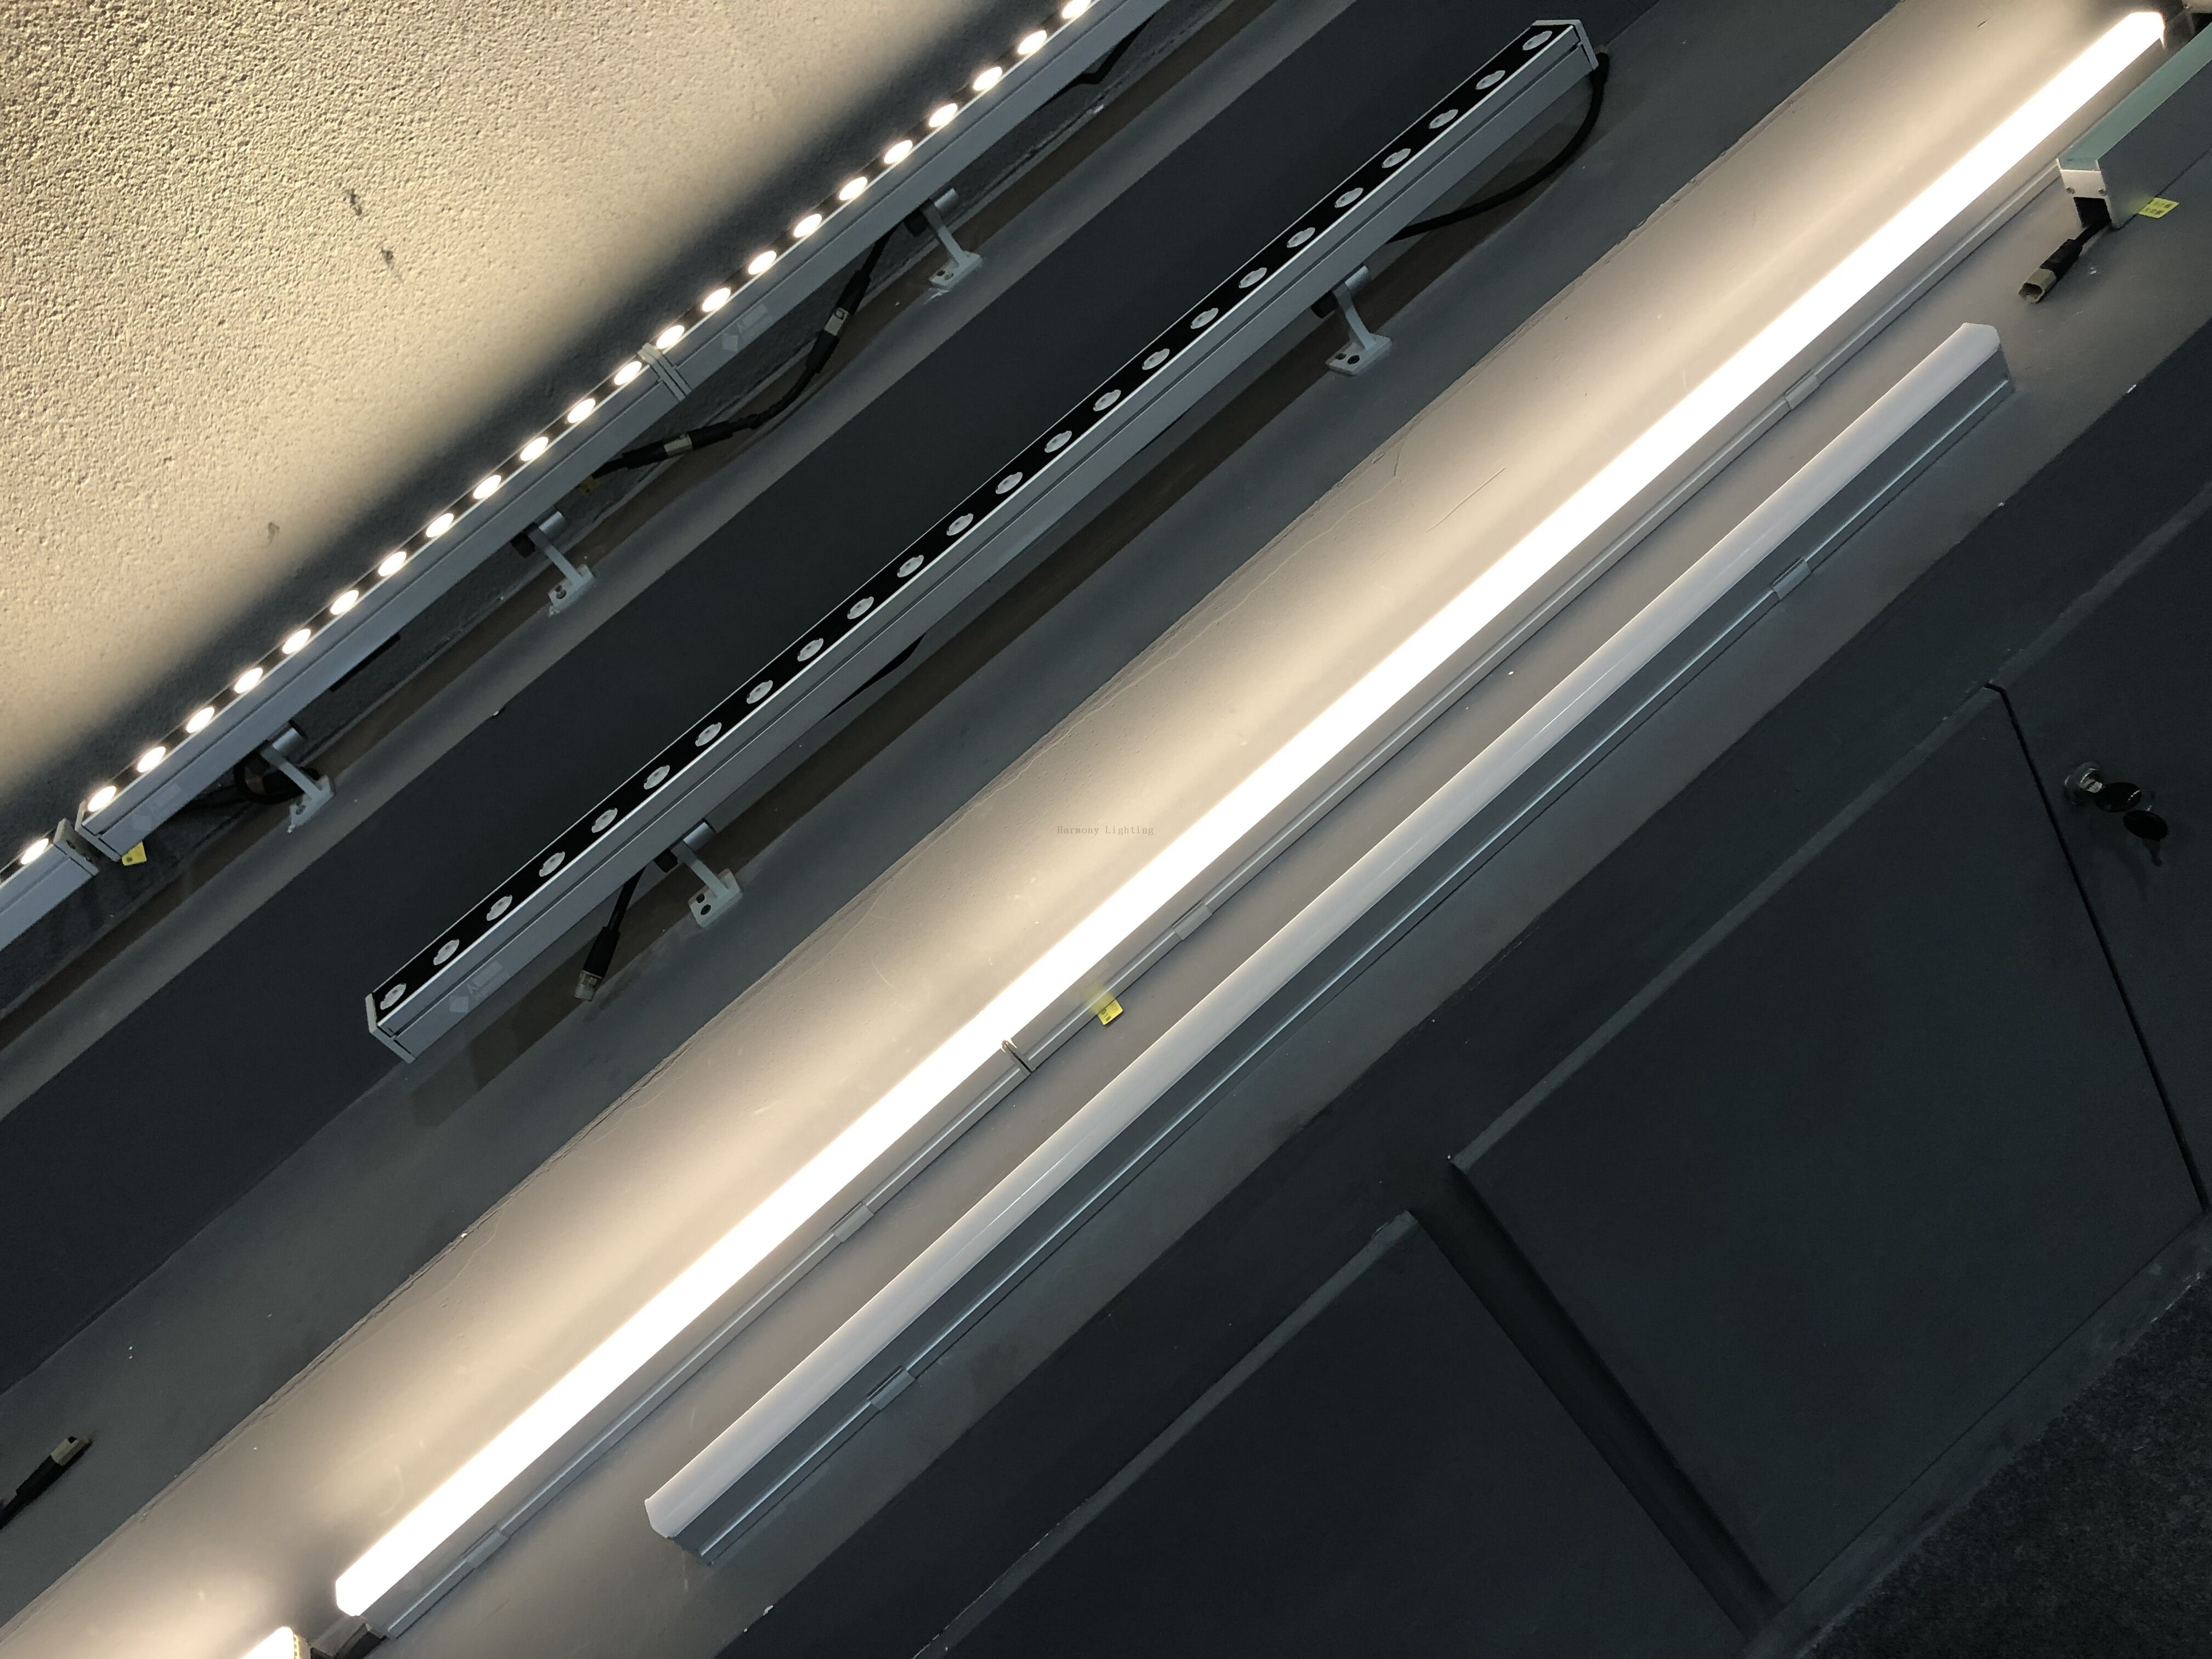 RH-C26 12W Outdoor led lighting bar, ip67 12w mini led strip linear light with aluminum profile